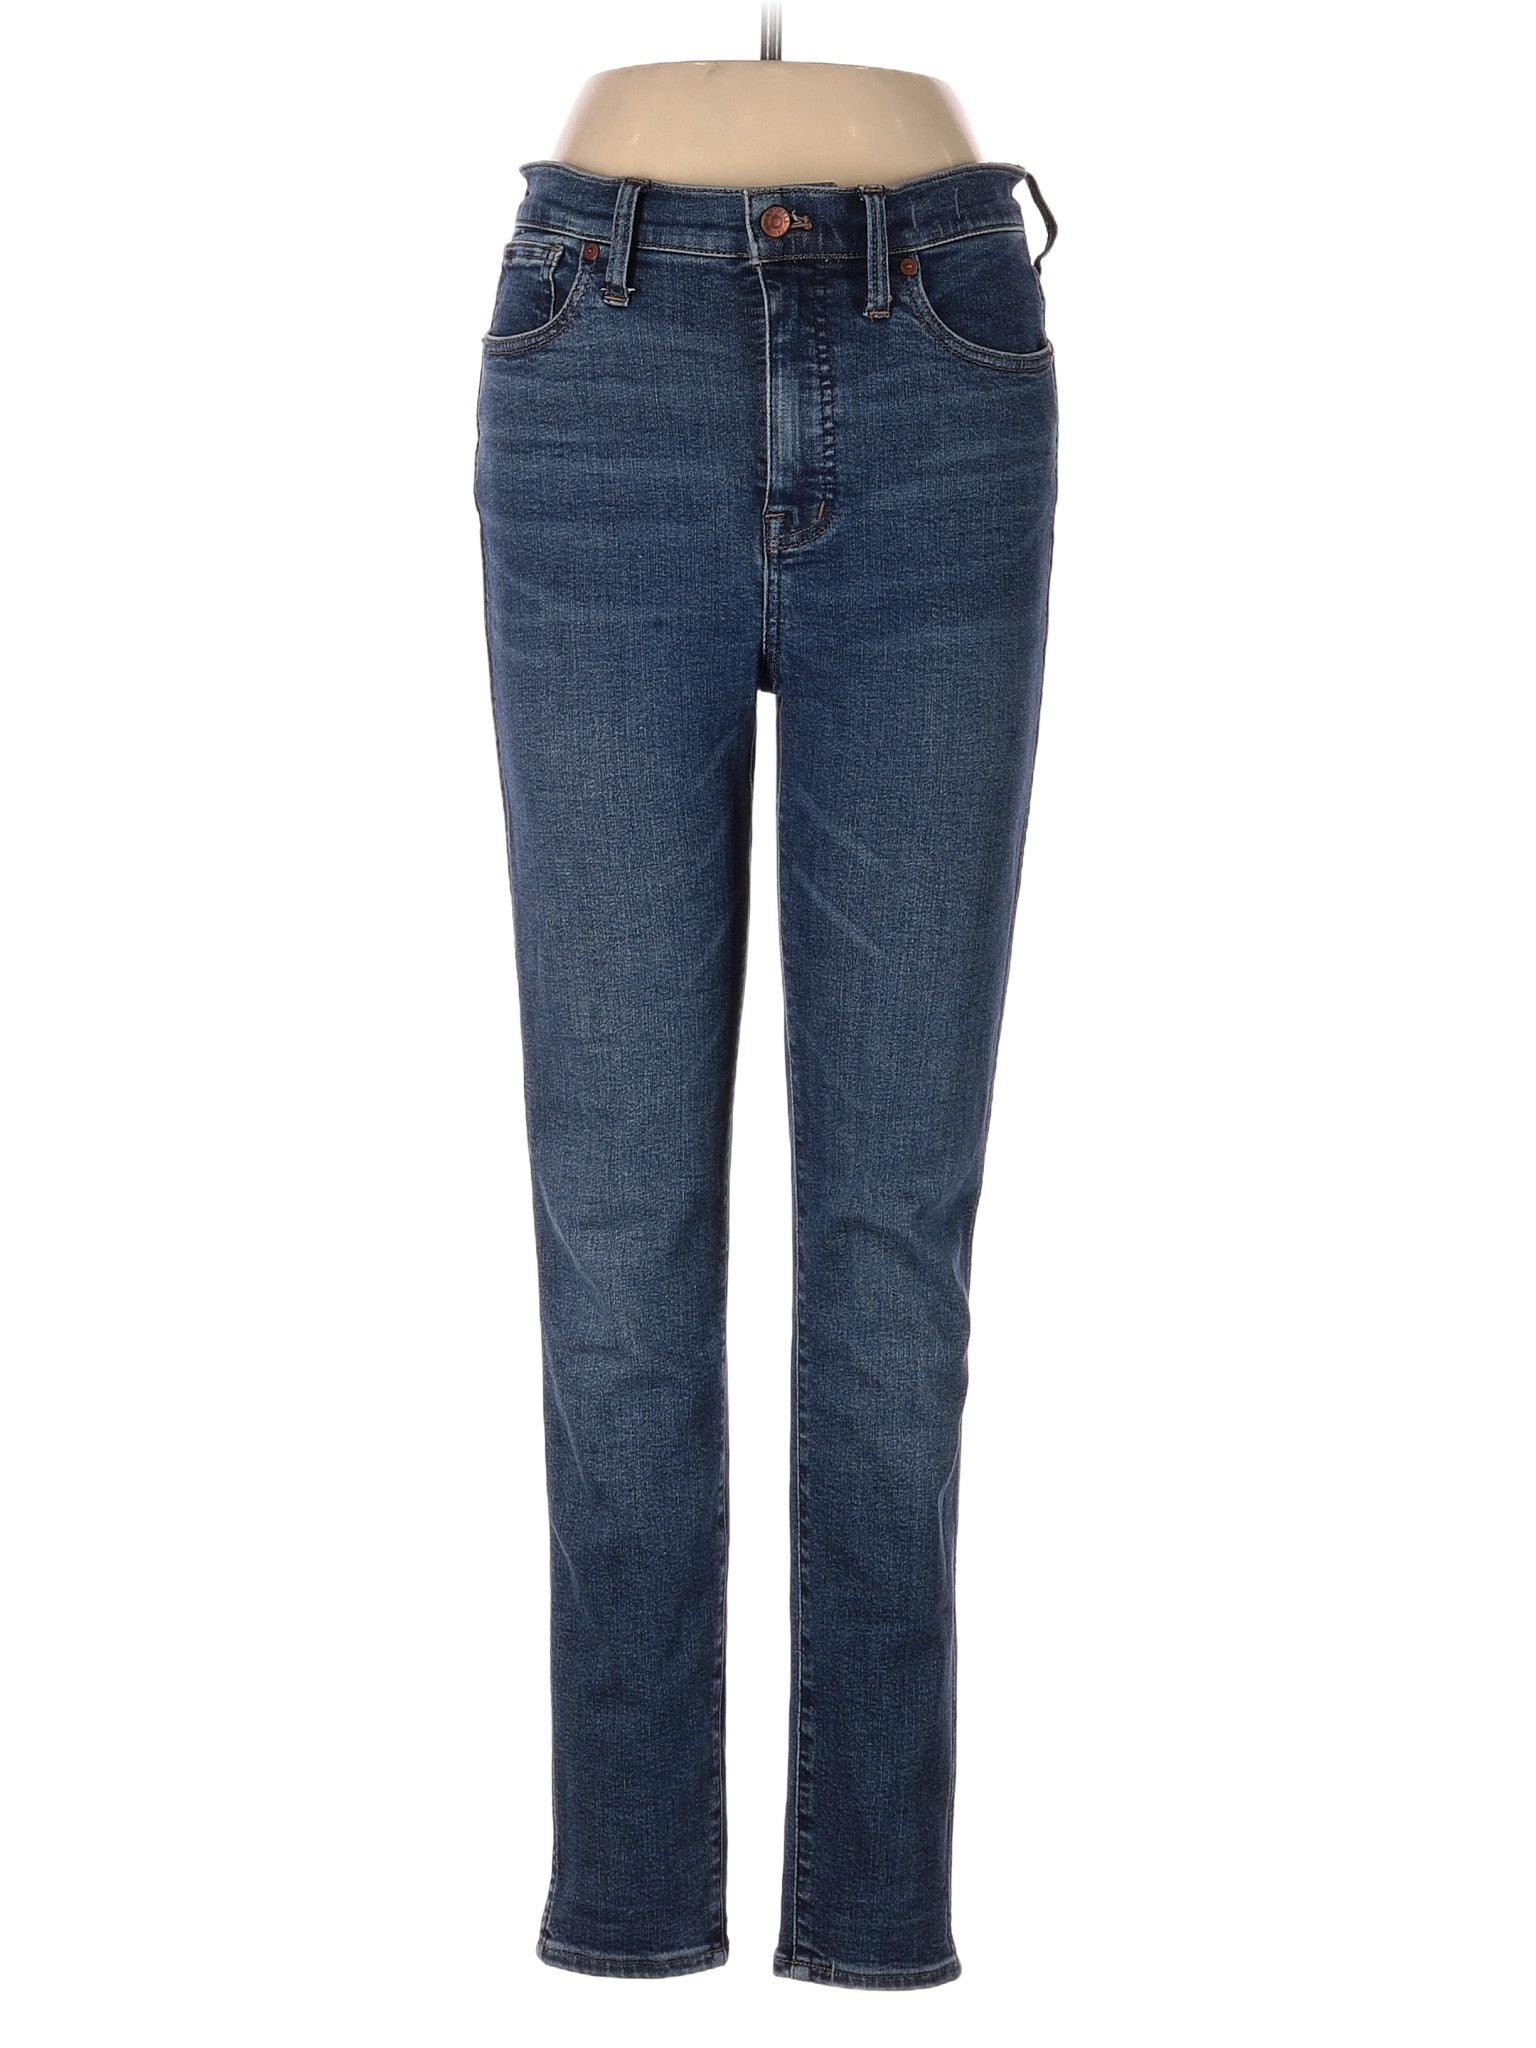 High-Rise Skinny Madewell Jeans 28 in Dark Wash waist size - 28